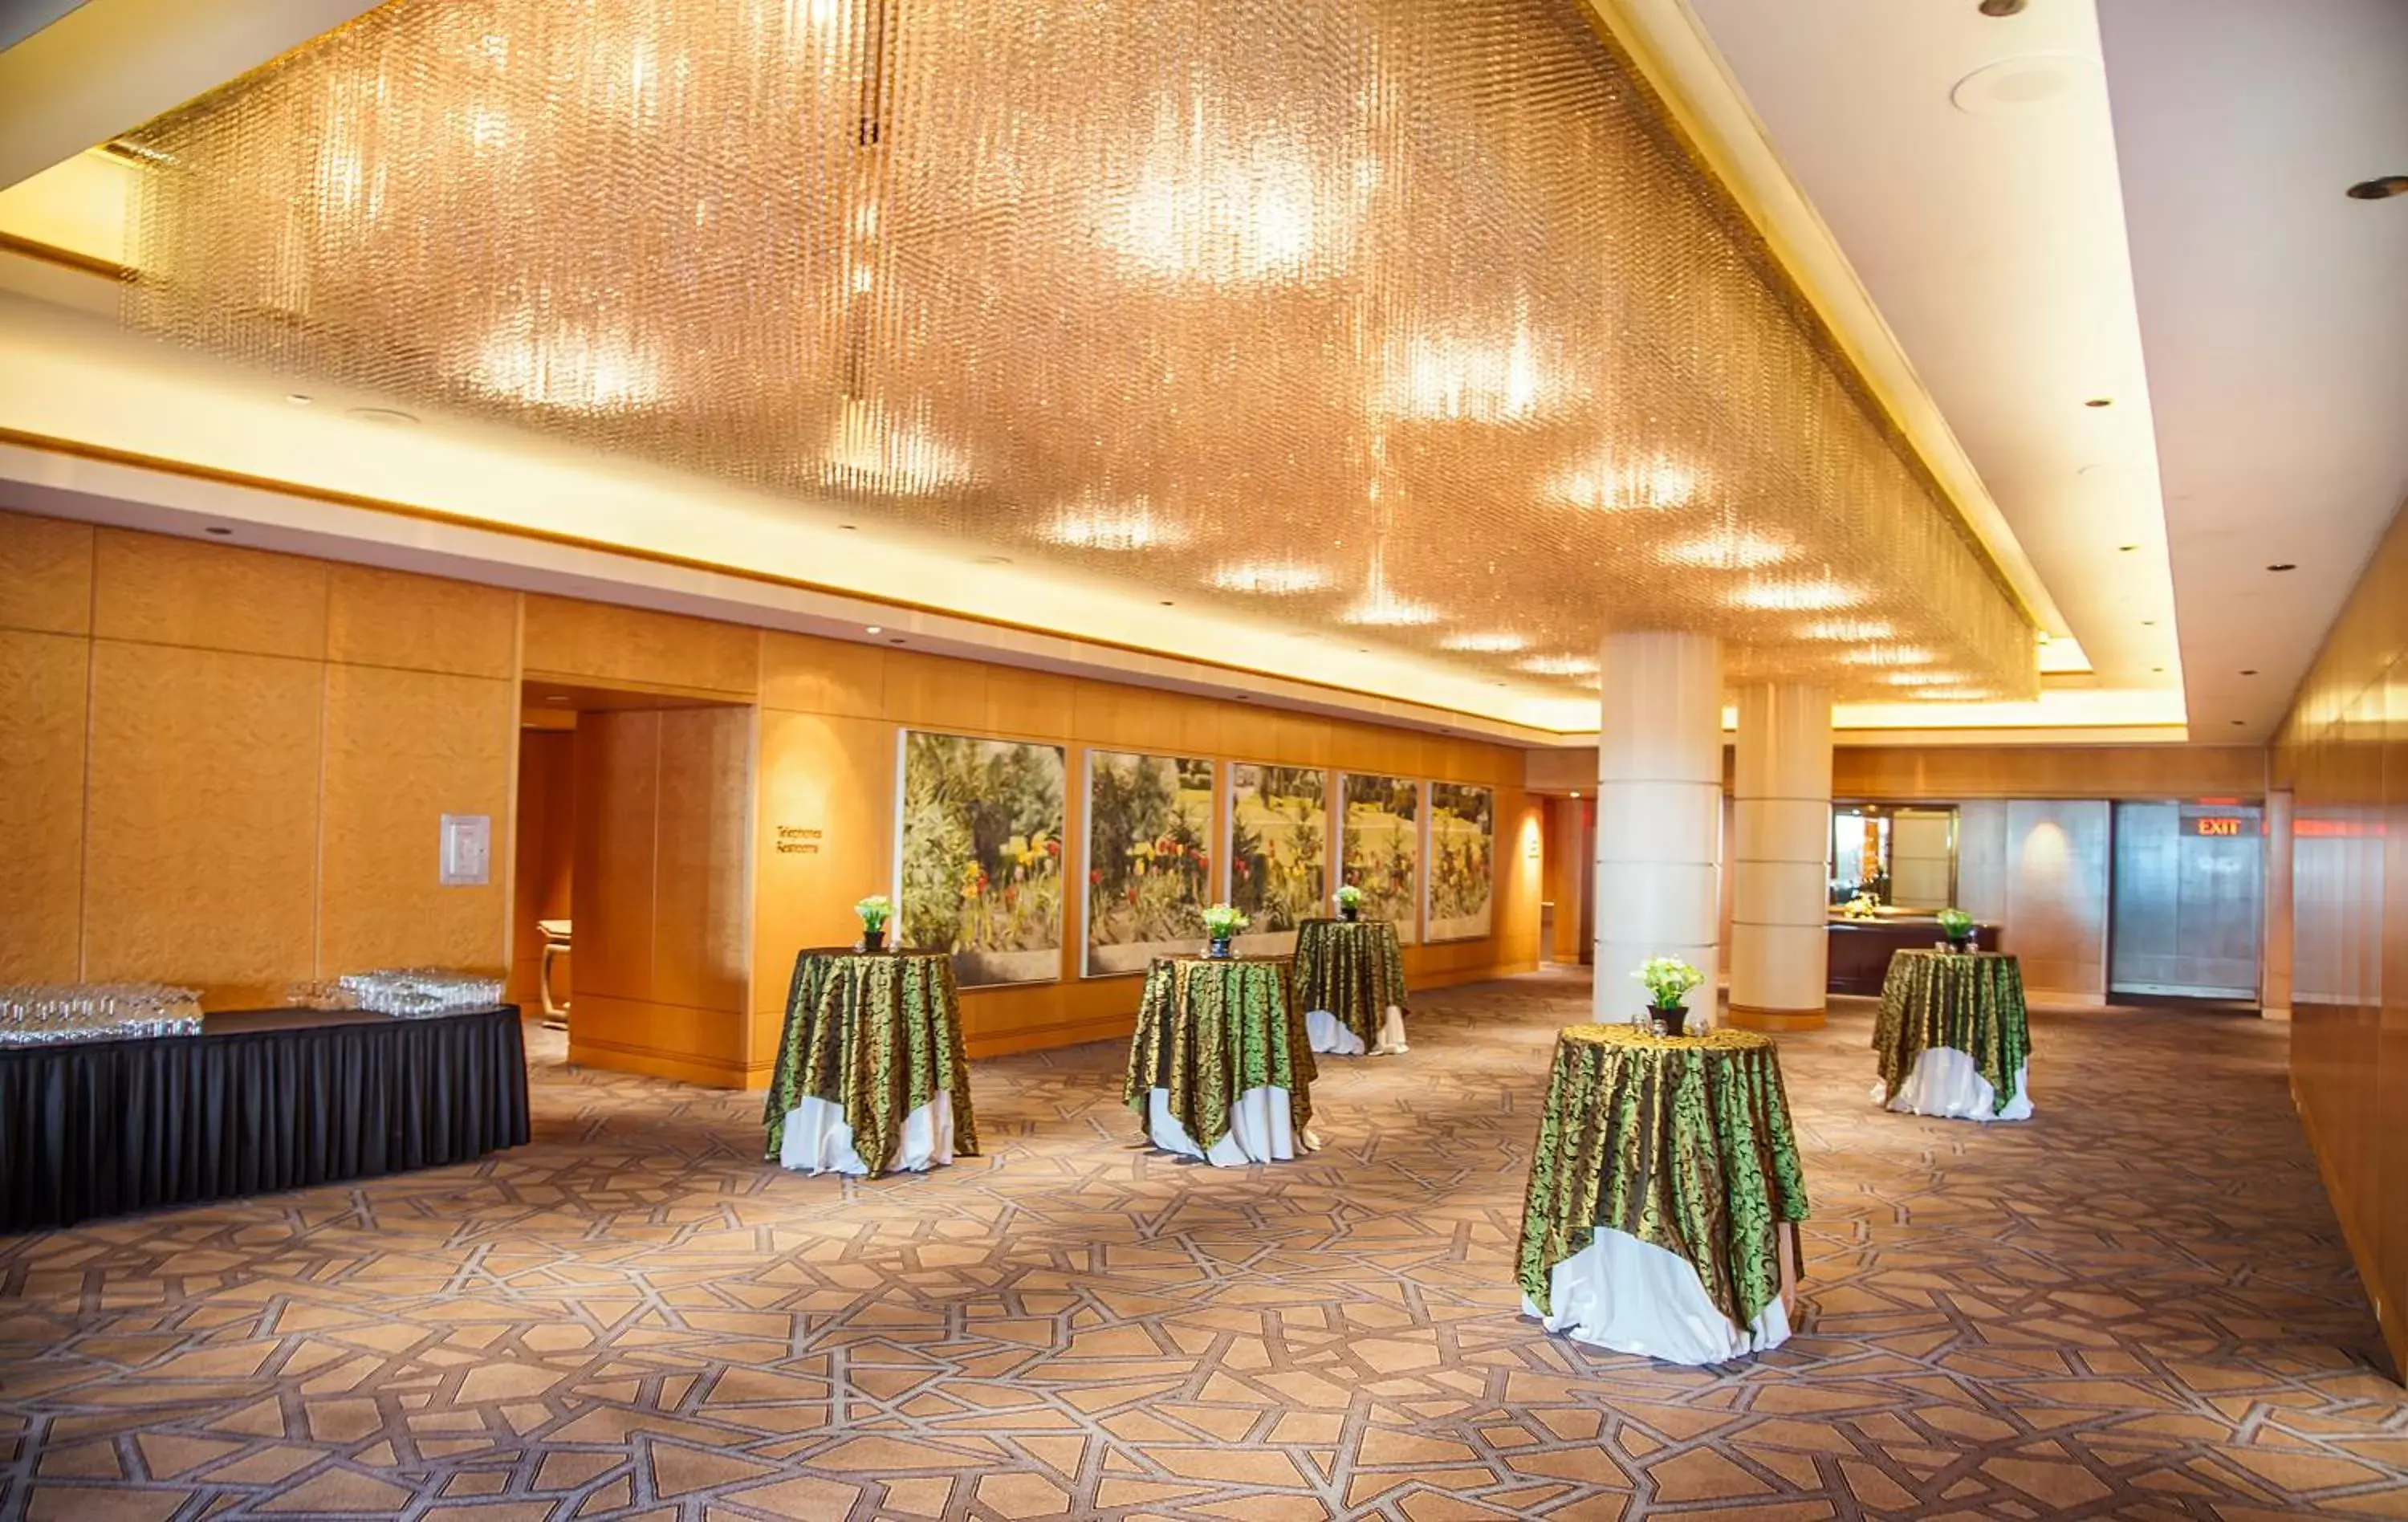 Banquet/Function facilities, Banquet Facilities in Pan Pacific Vancouver